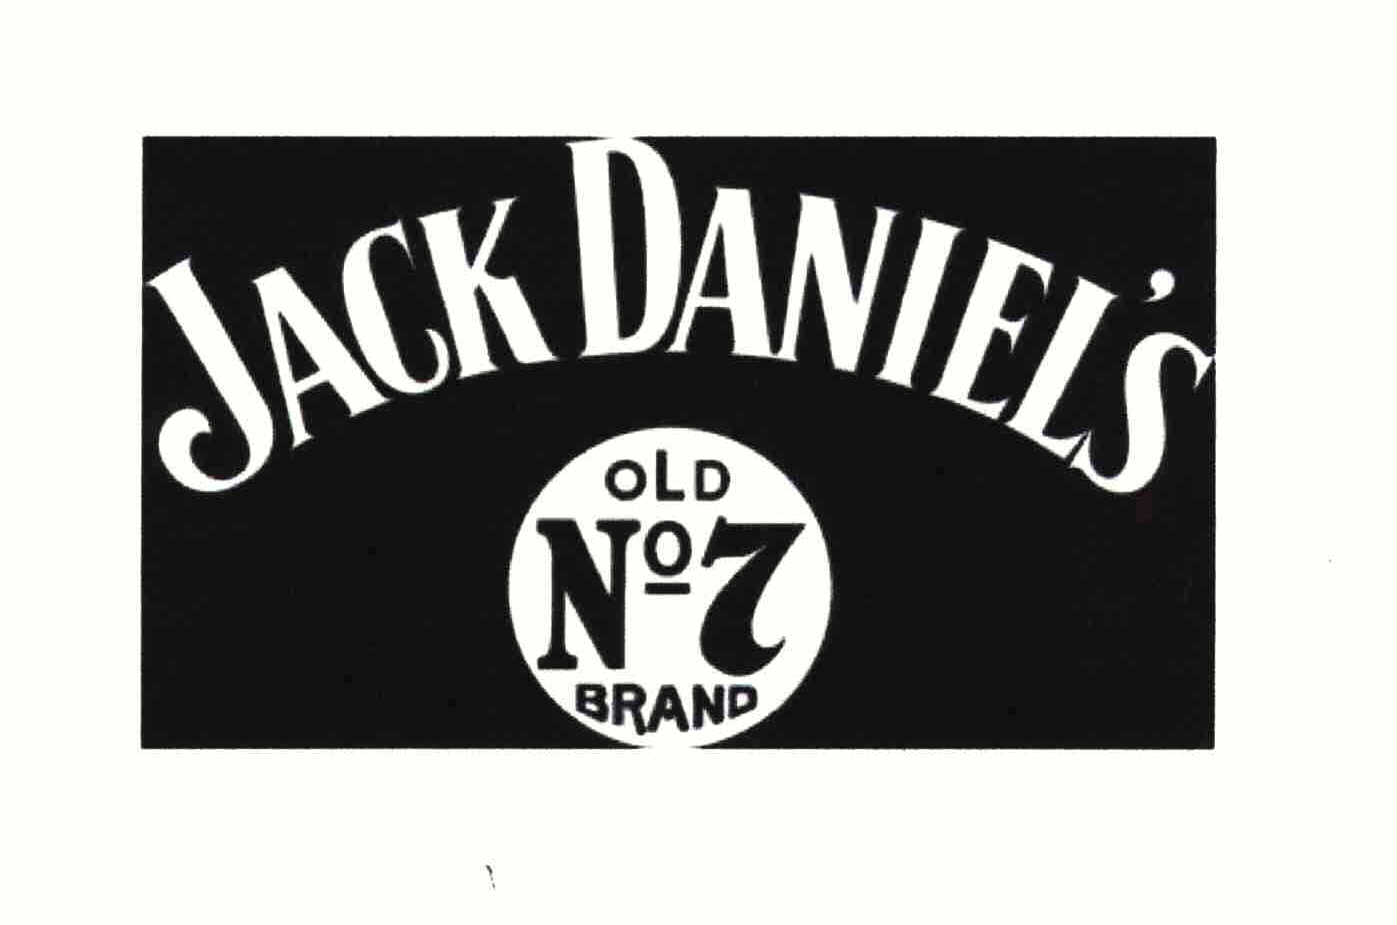  JACK DANIEL'S OLD NO 7 BRAND